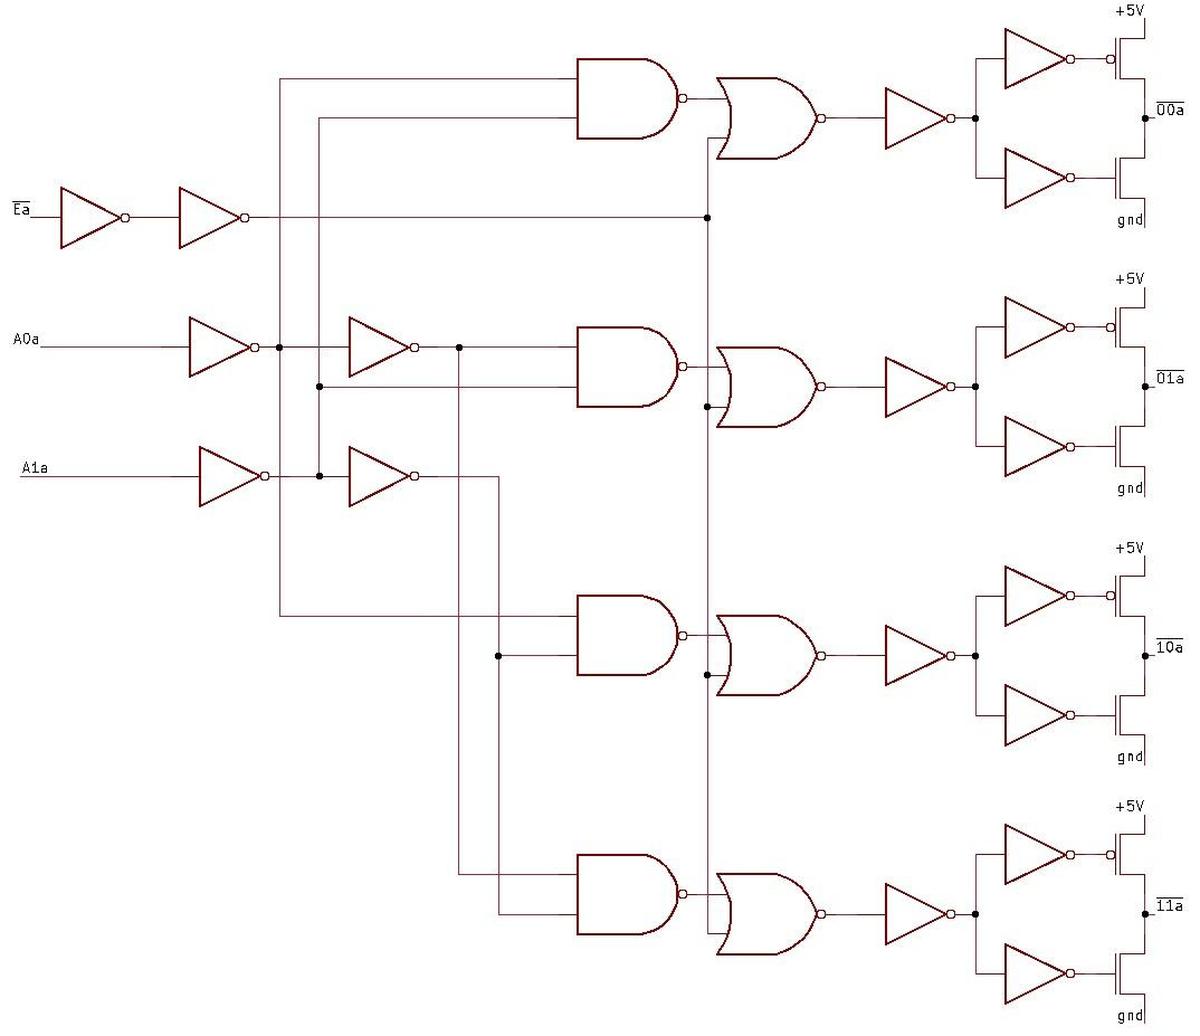 Reverse-engineered schematic of half the chip.